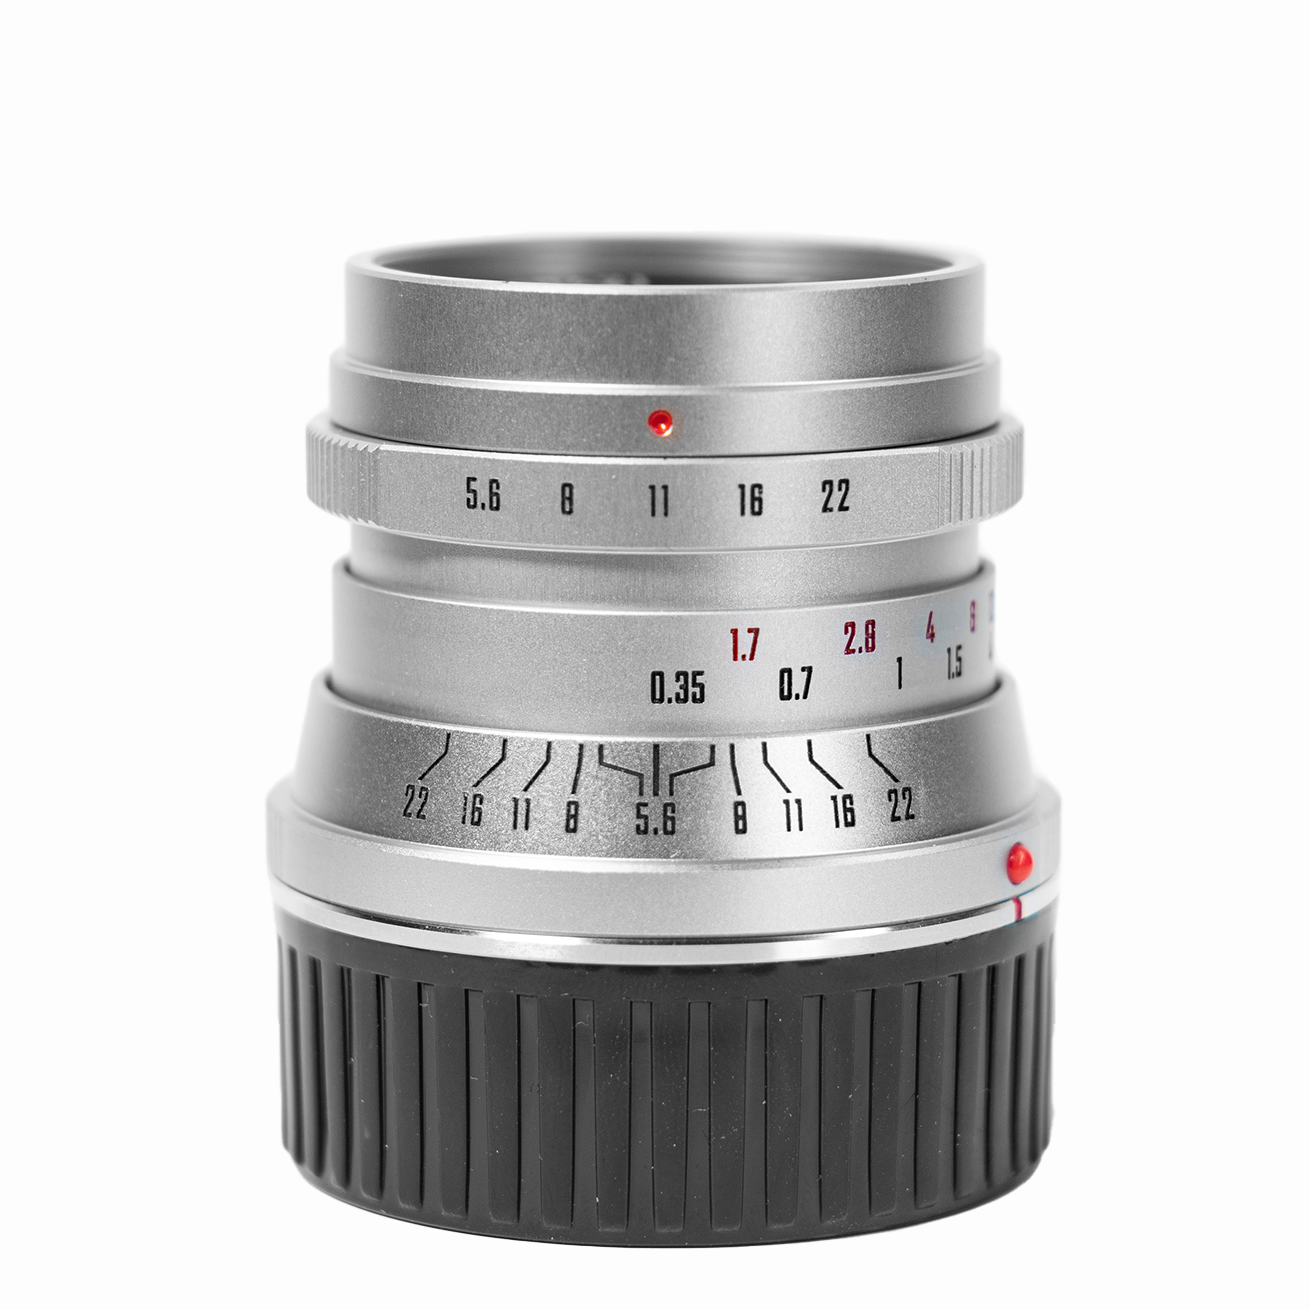 Mitakon Zhongyi Creator 28mm f/5.6 Lens for Fujifilm X